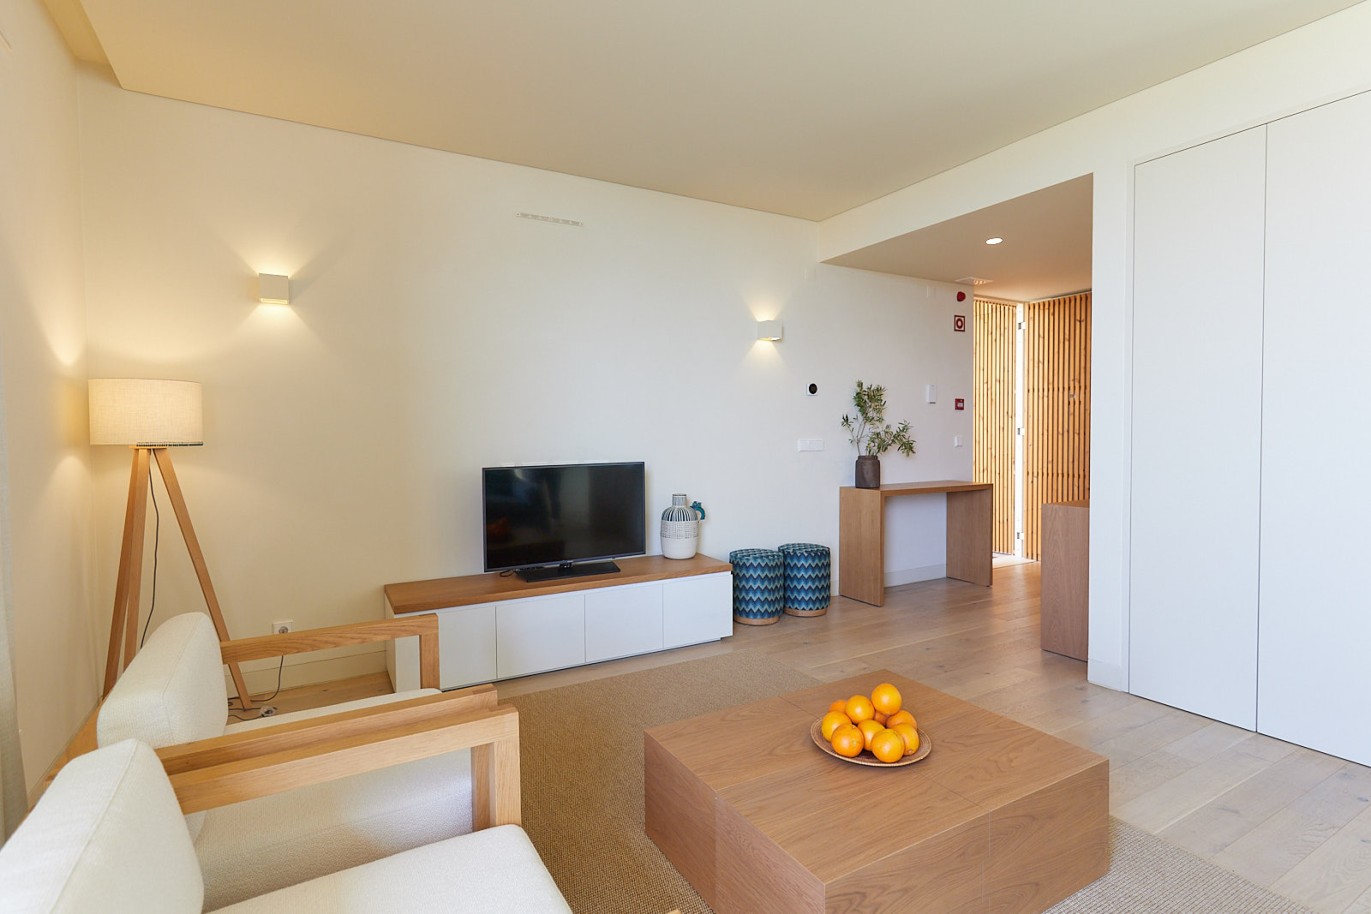 2 bedroom apartment in resort, for sale in Porches, Algarve_229102